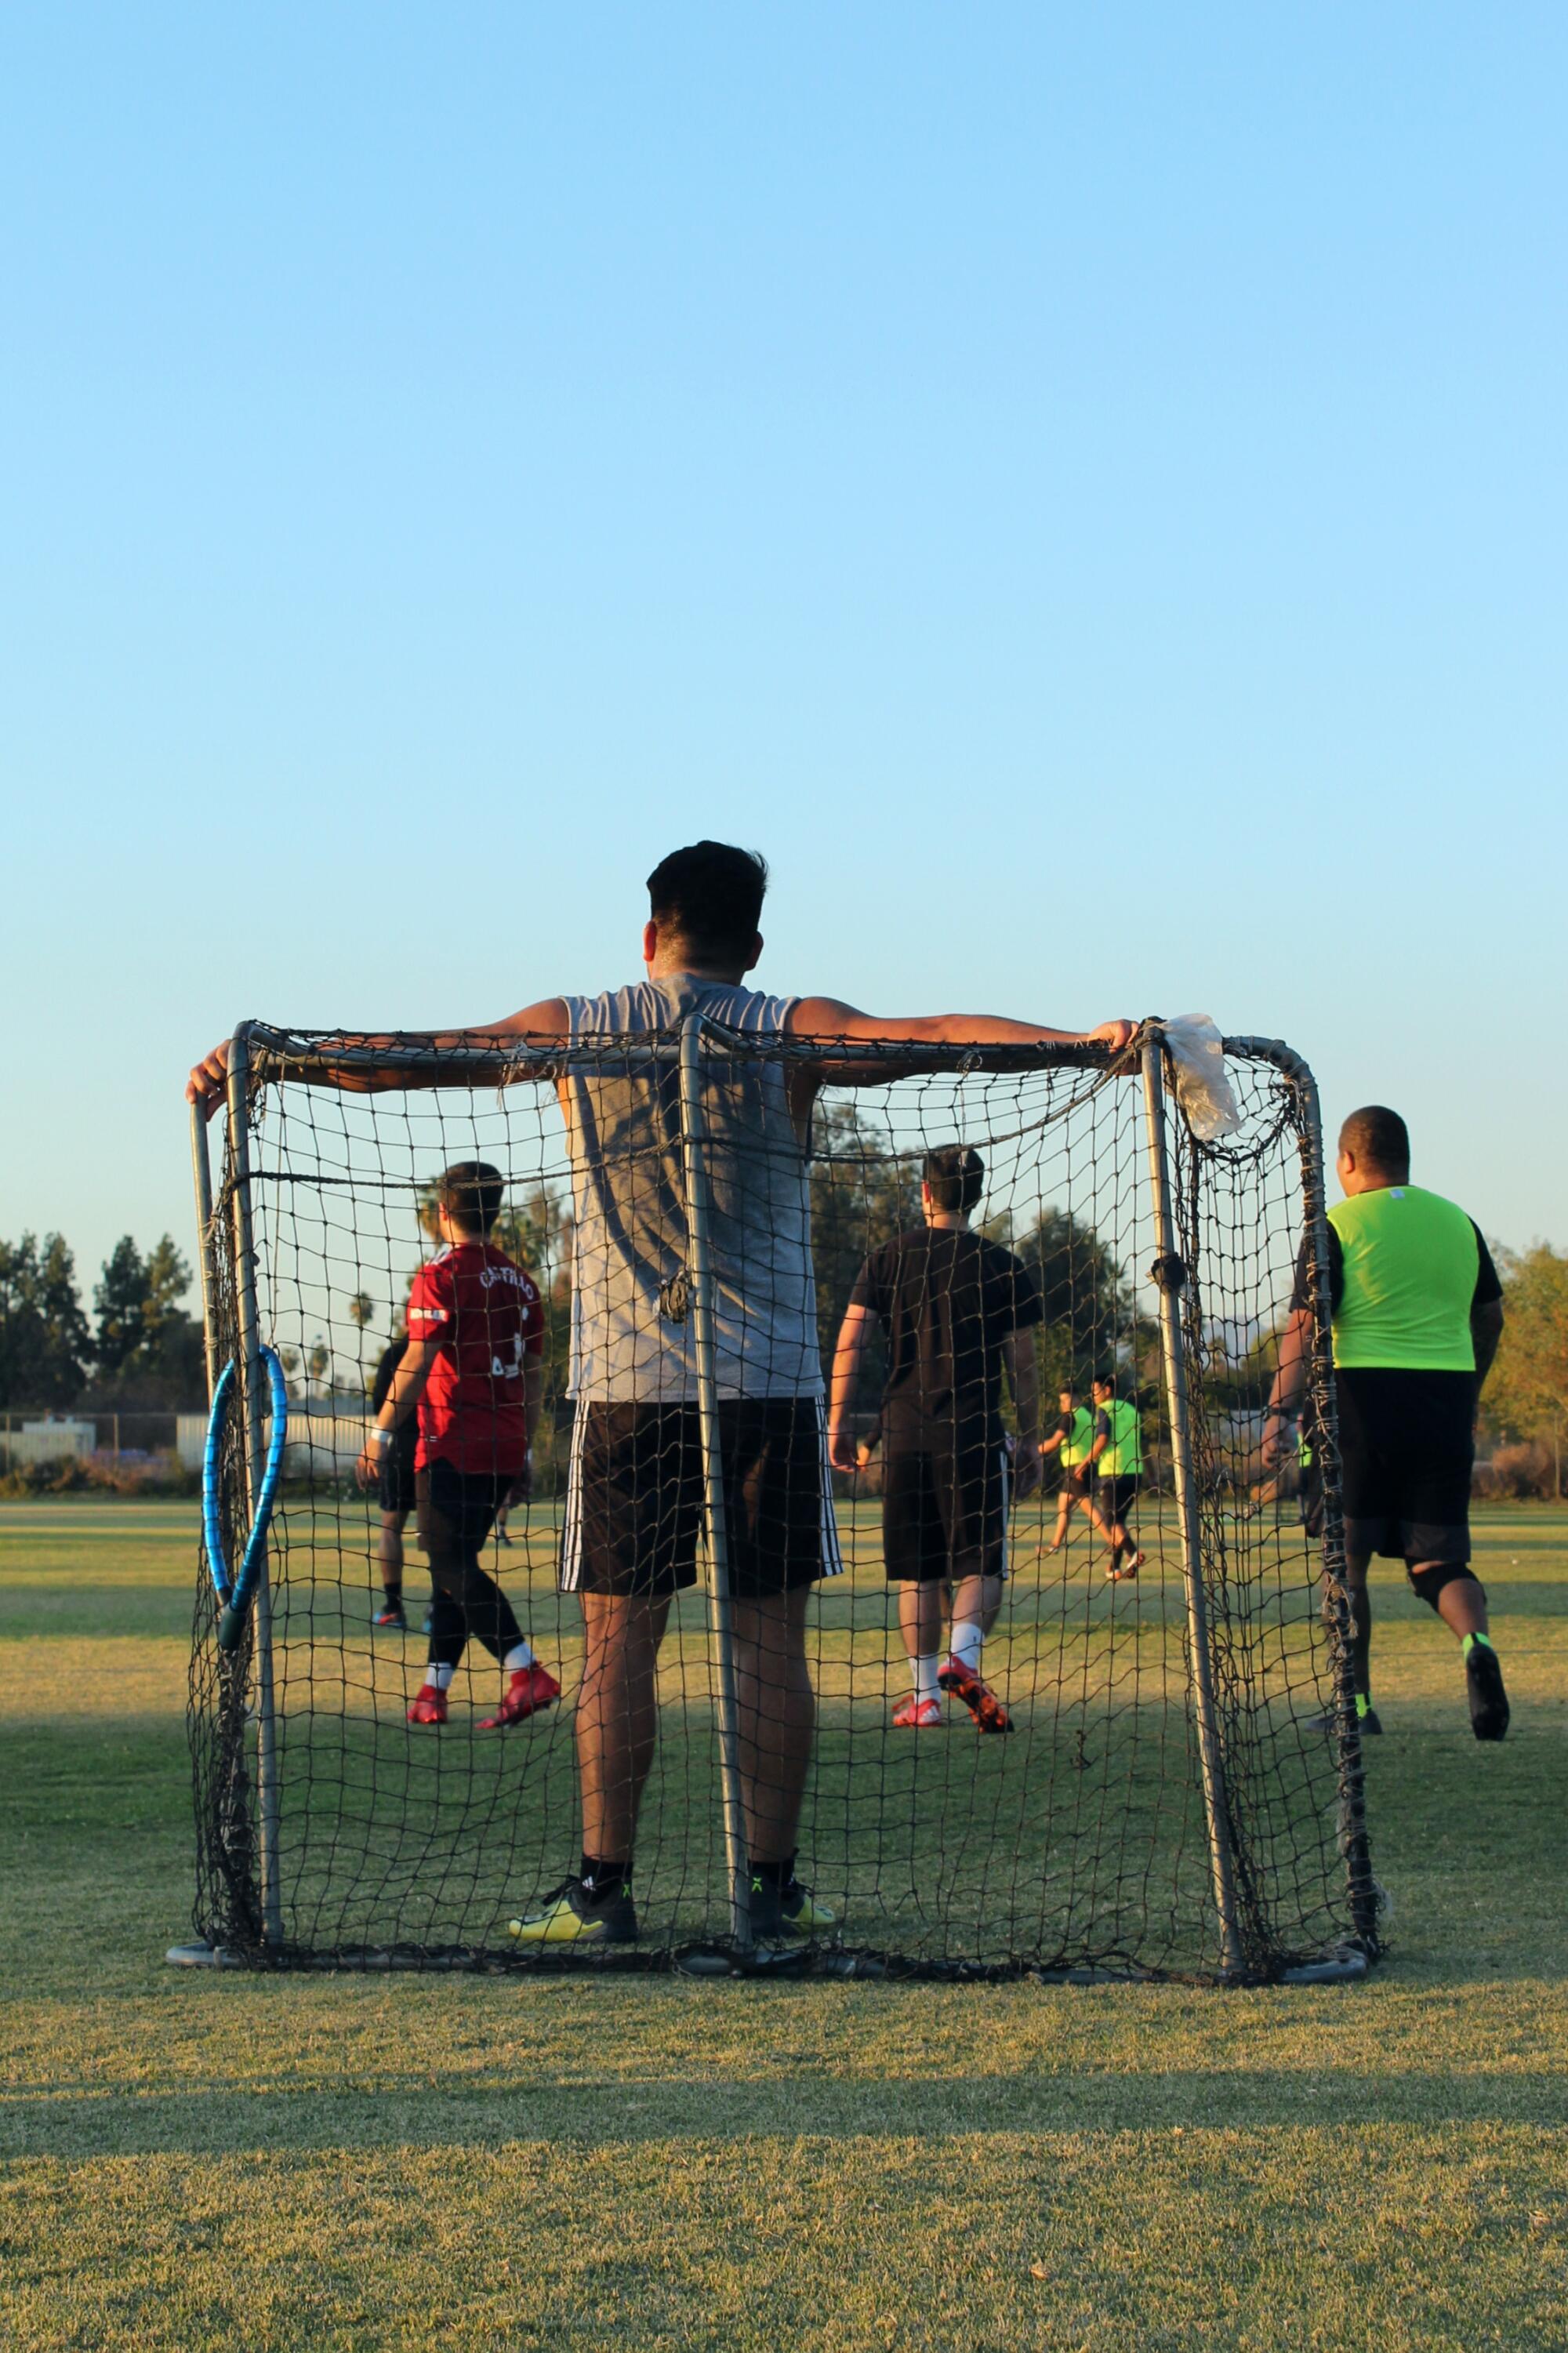 A goalpost that matches the size of Zergy Gallardo’s wingspan